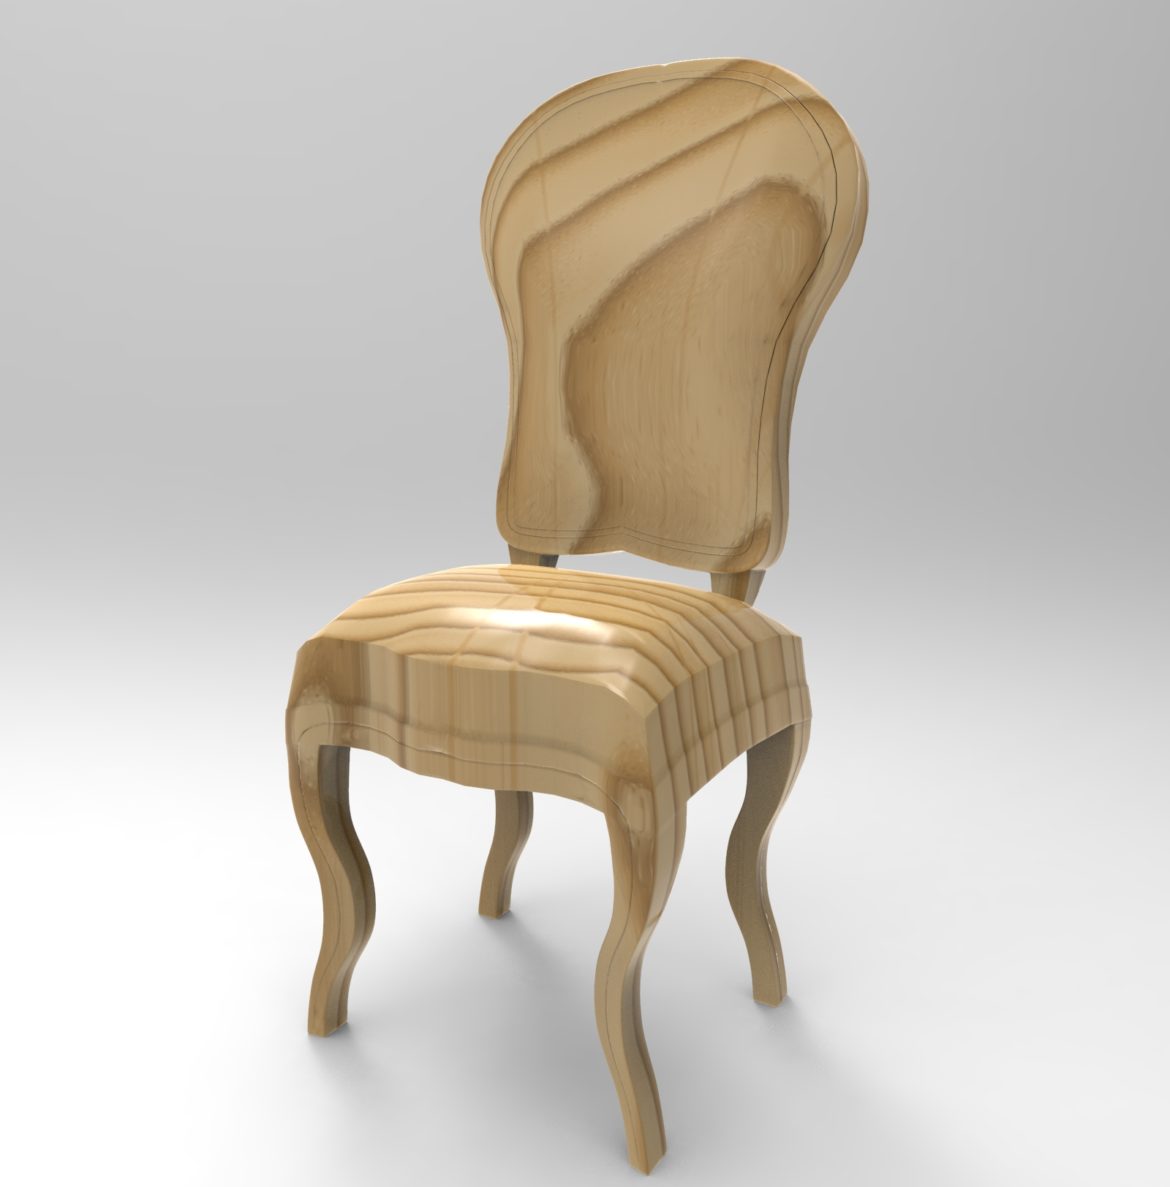 chair chapender-7 3d model max obj 295877